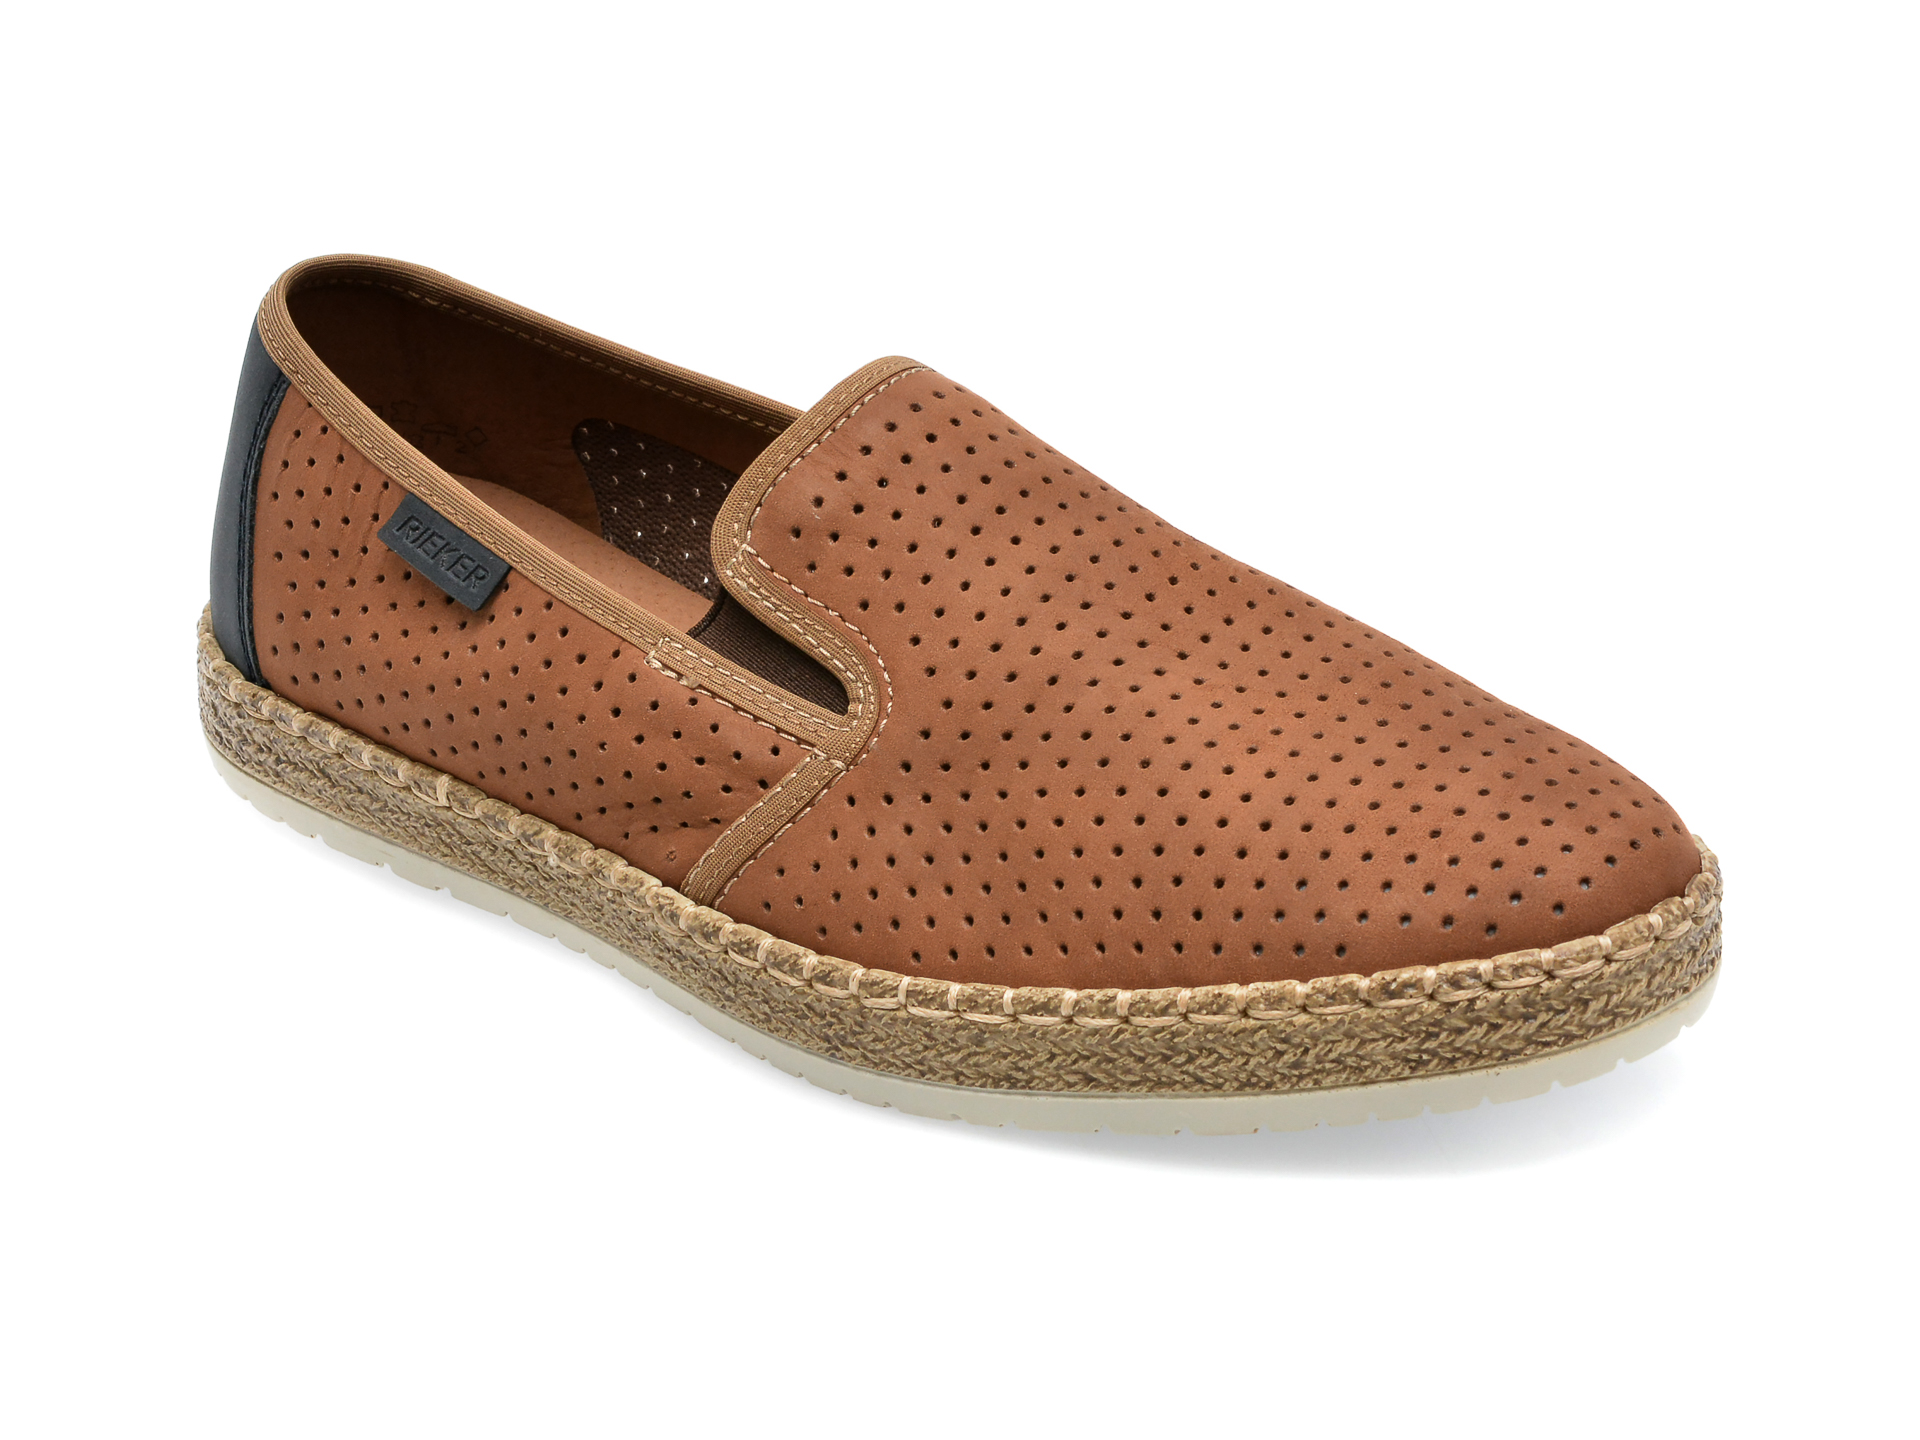 Pantofi RIEKER maro, B5278, din piele naturala /barbati/pantofi